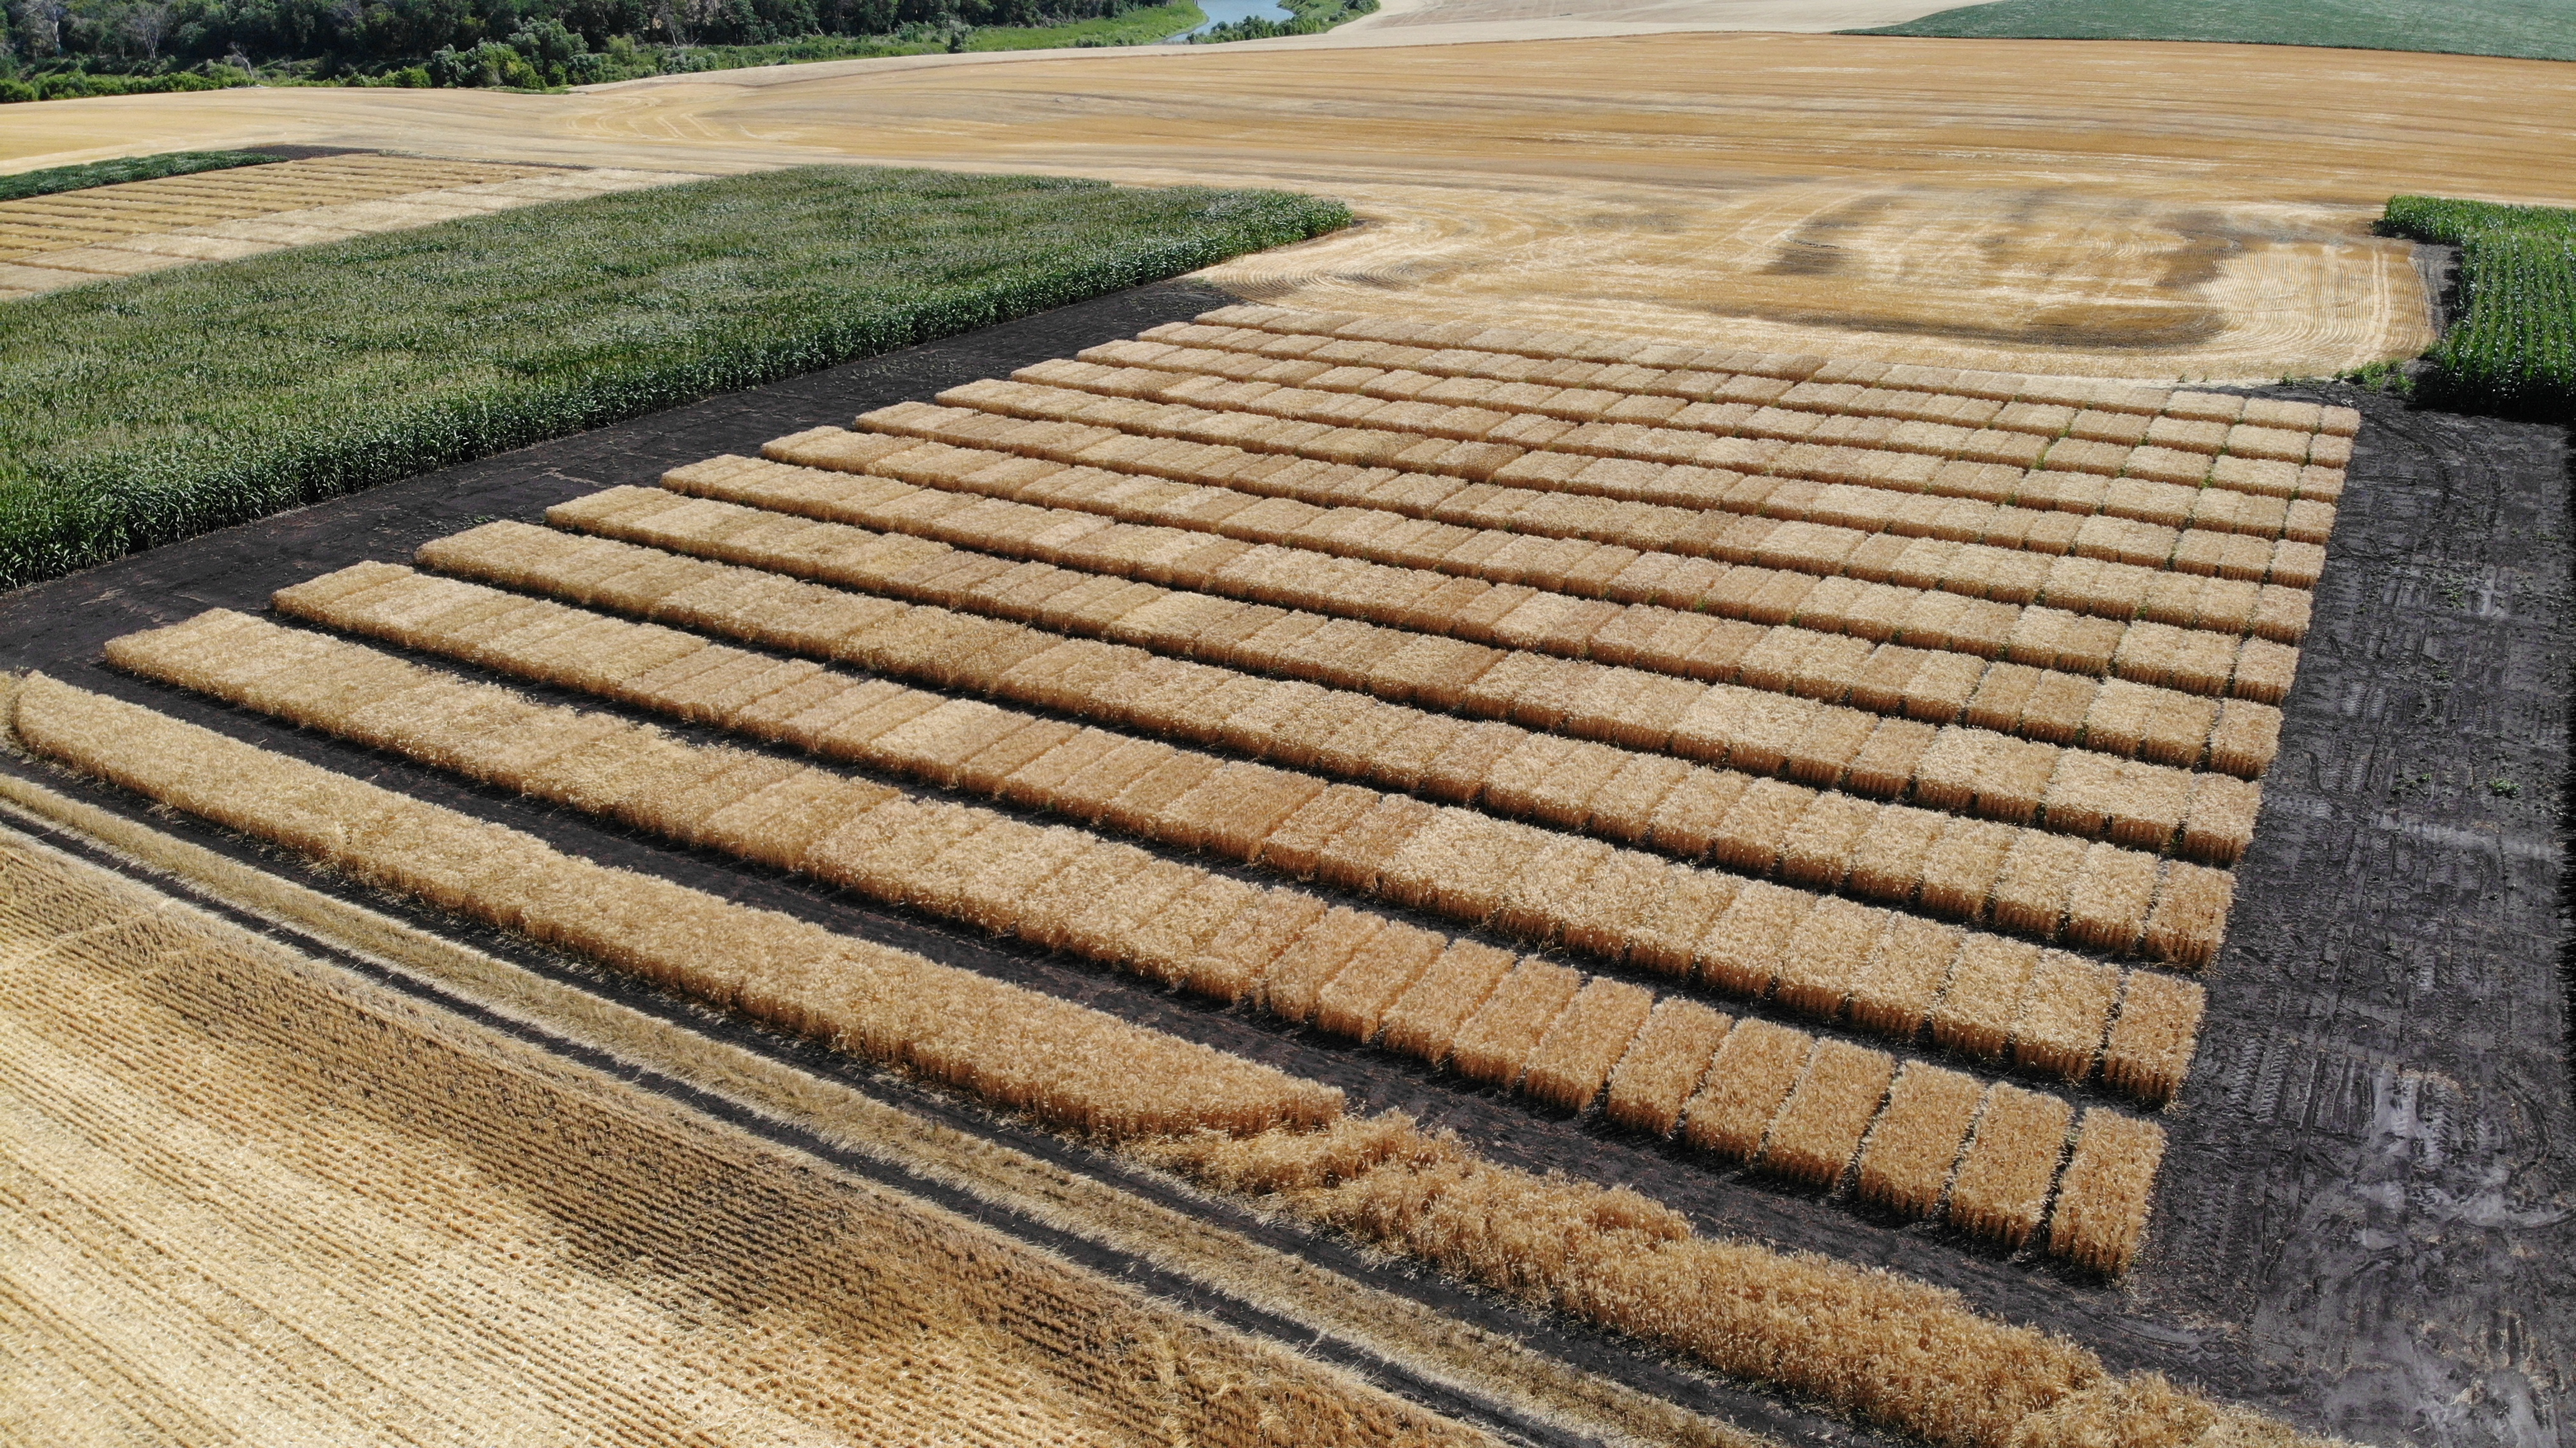 Wheat trials at Grand Forks, North Dakota, 2021 (NDSU photo)